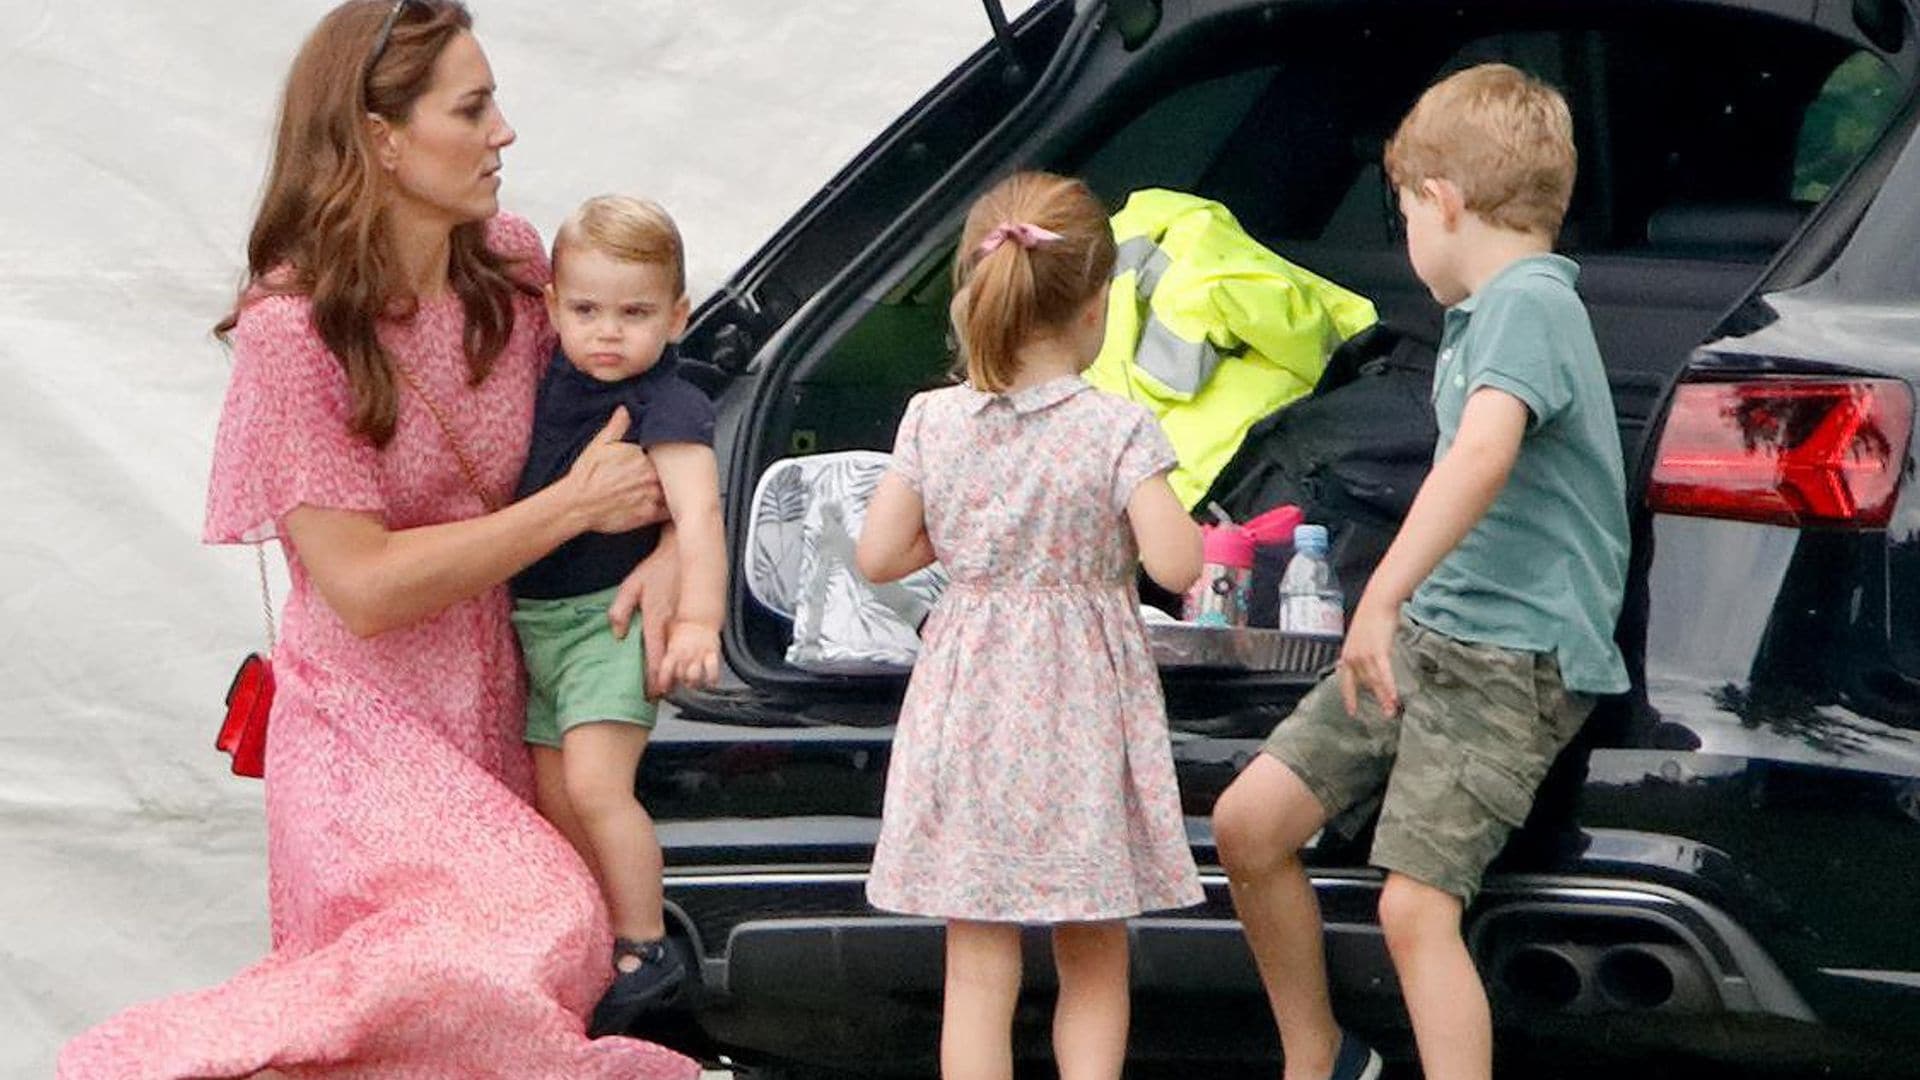 Kate Middleton takes her well-behaved children to the supermarket amid coronavirus outbreak